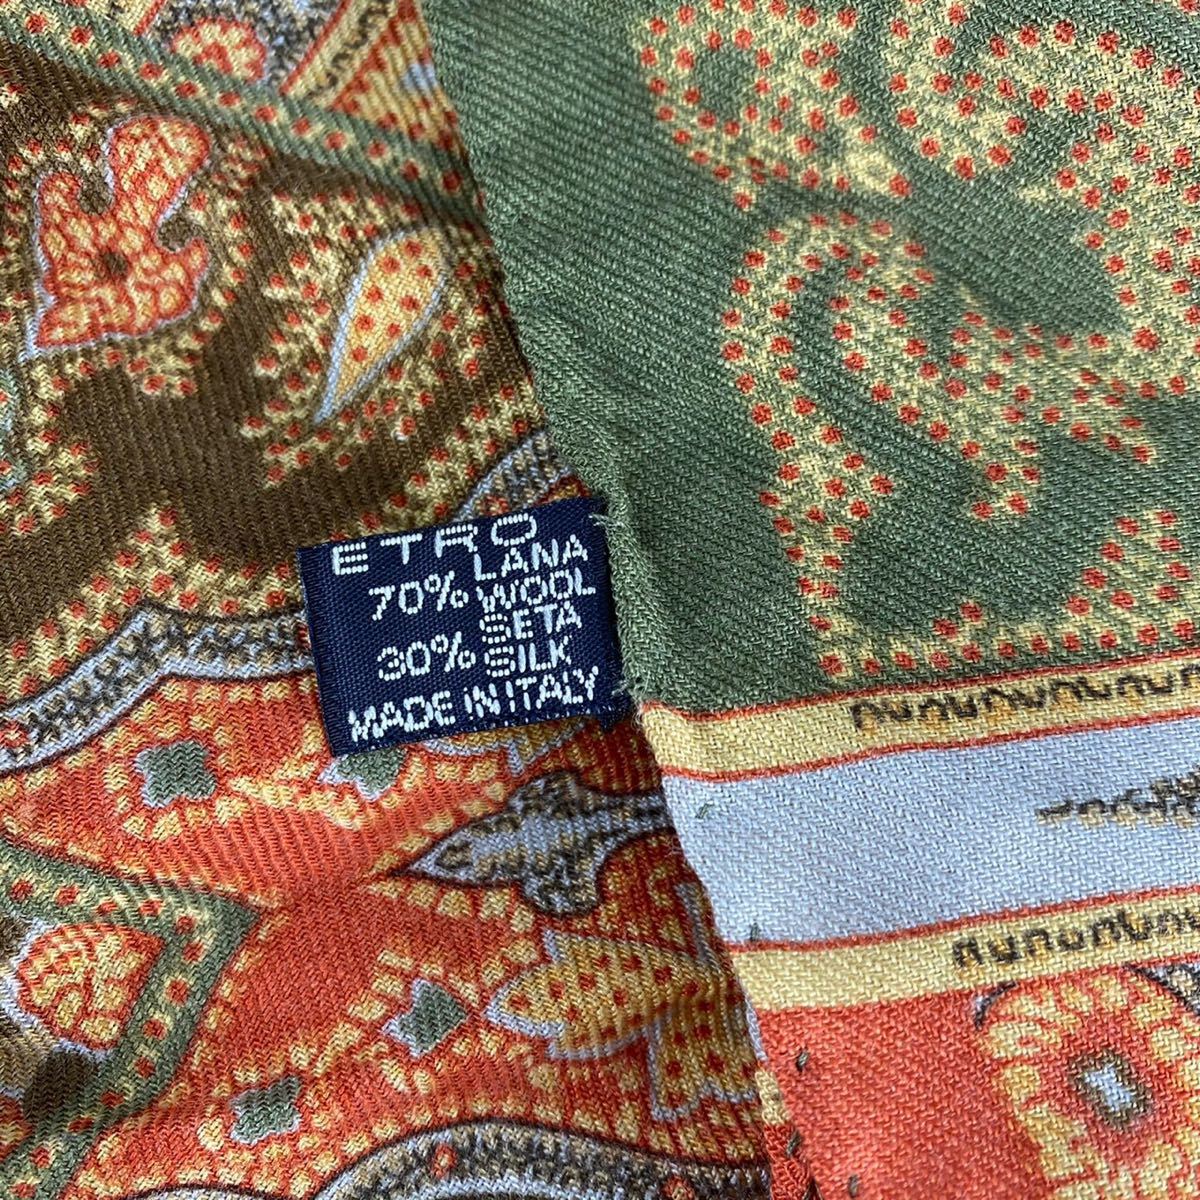 ETRO WOOL SILK PAISLEY PATTERNED LARGE SIZE SHAWL MADE IN ITALY/ Etro wool silk peiz Lee pattern large size shawl ( stole )